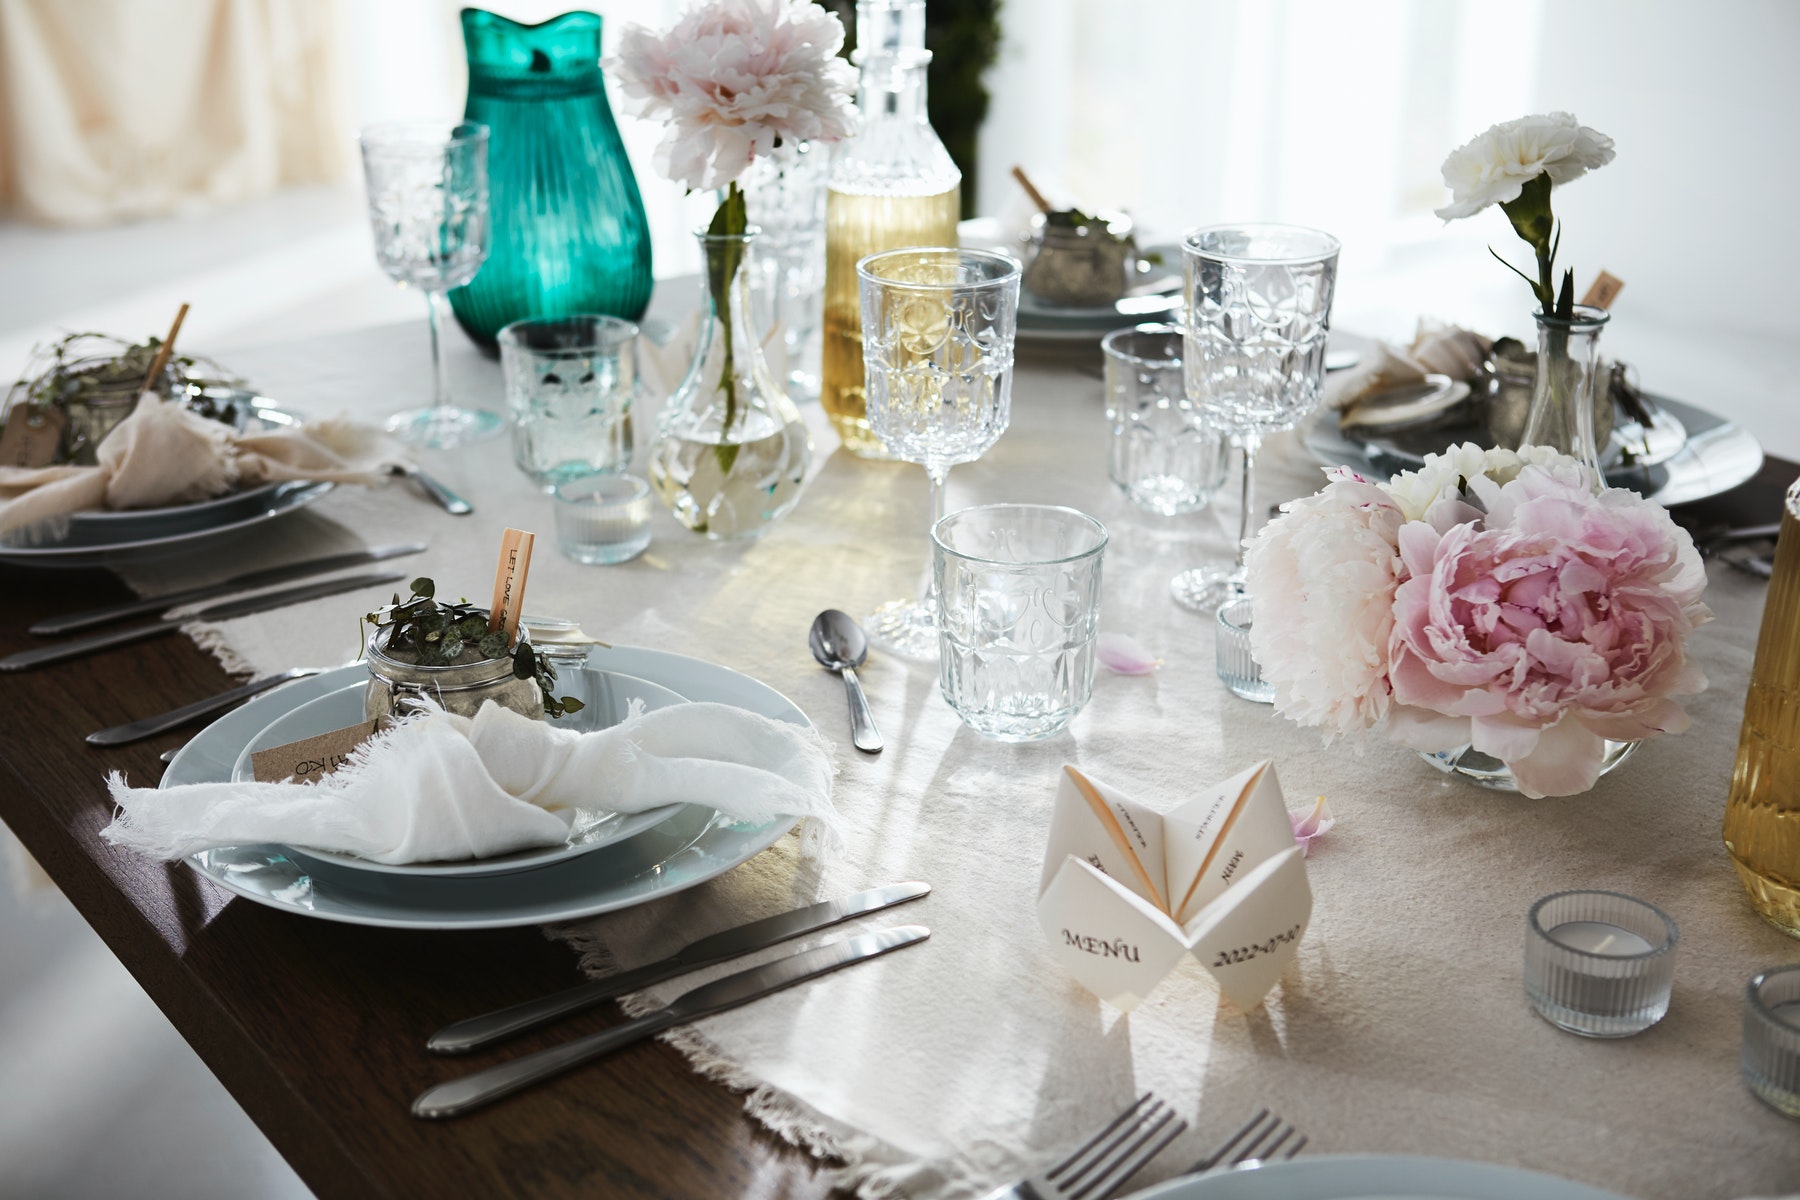 IKEA - A festive and elegant wedding table